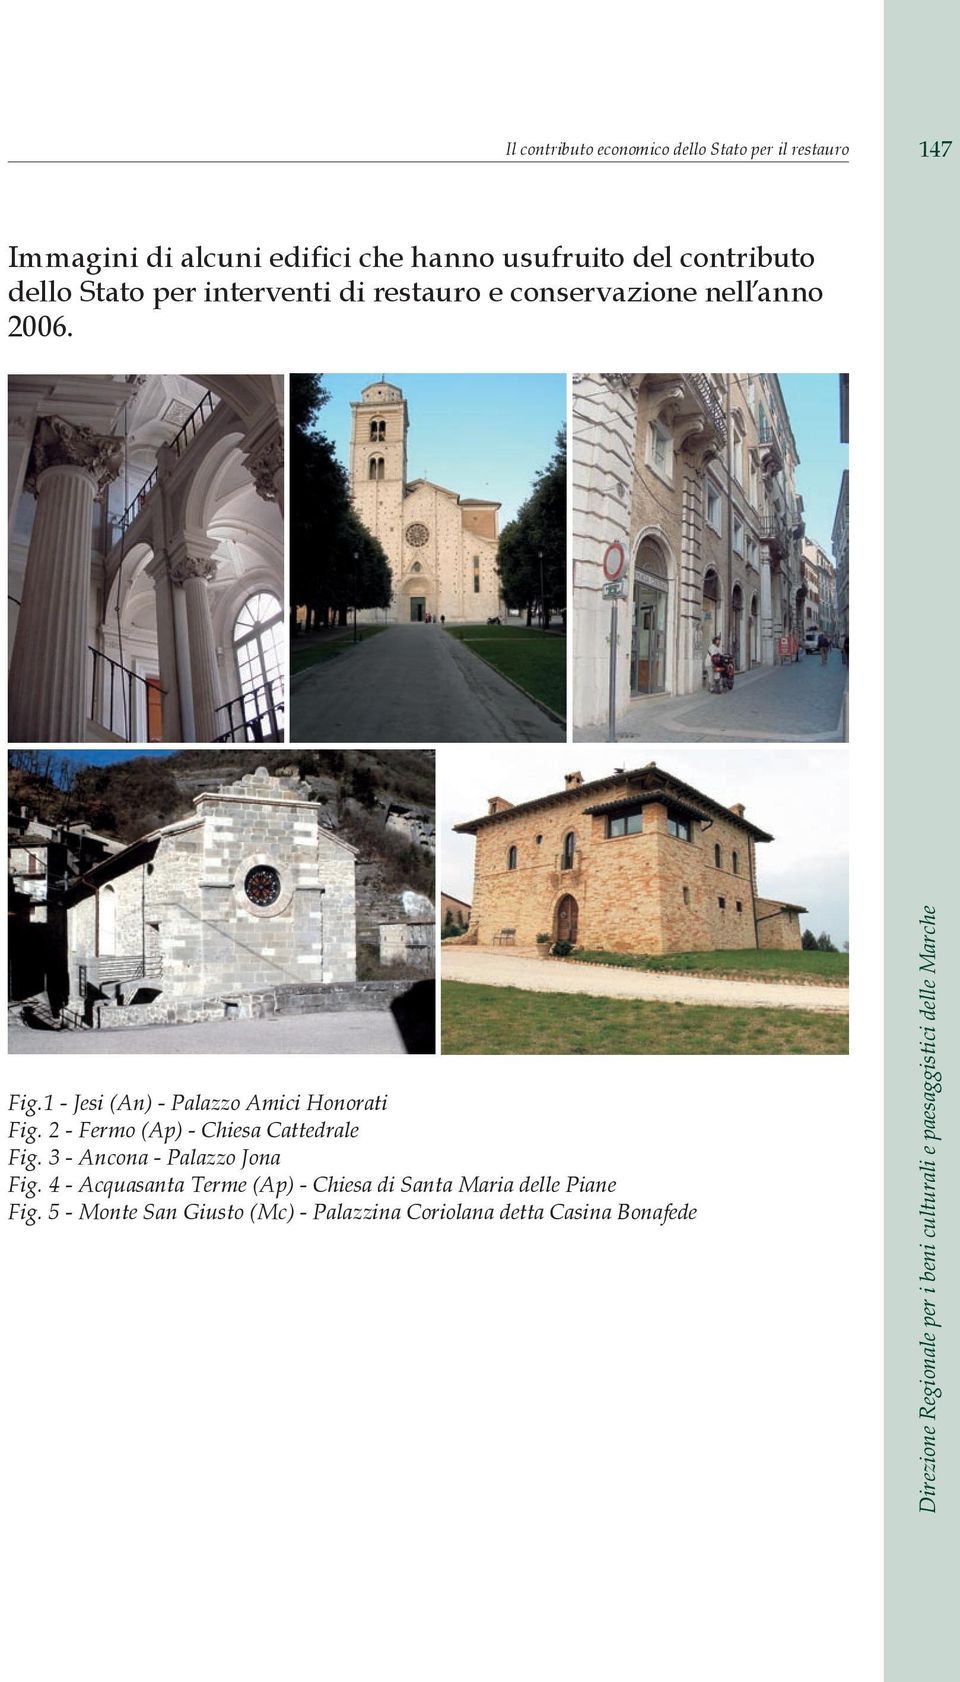 2 - Fermo (Ap) - Chiesa Cattedrale Fig. 3 - Ancona - Palazzo Jona Fig.